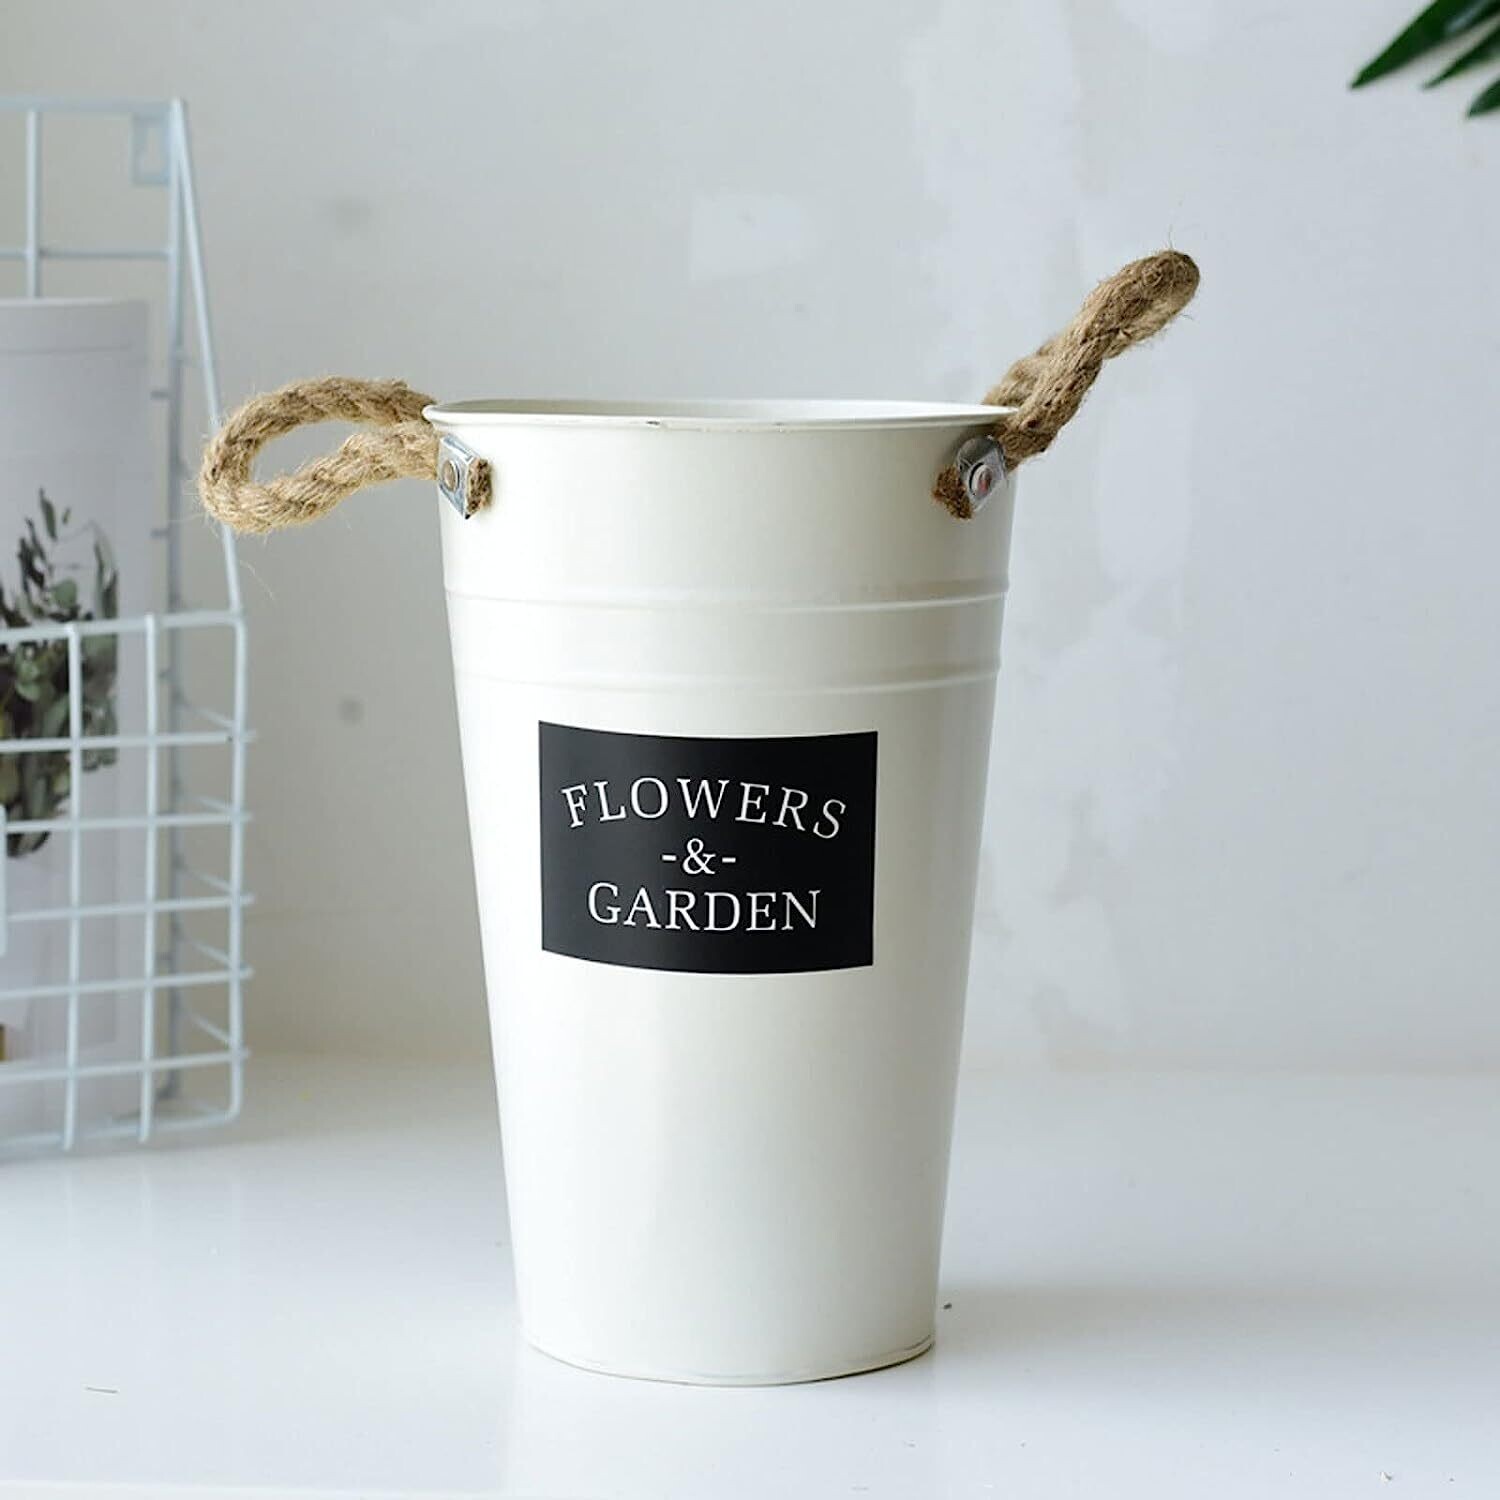 Flower Bucket,outdoor Simple Iron Flower Bucket,garden Flower Bucket,rustic French Country Style Flower Bucket (Large)